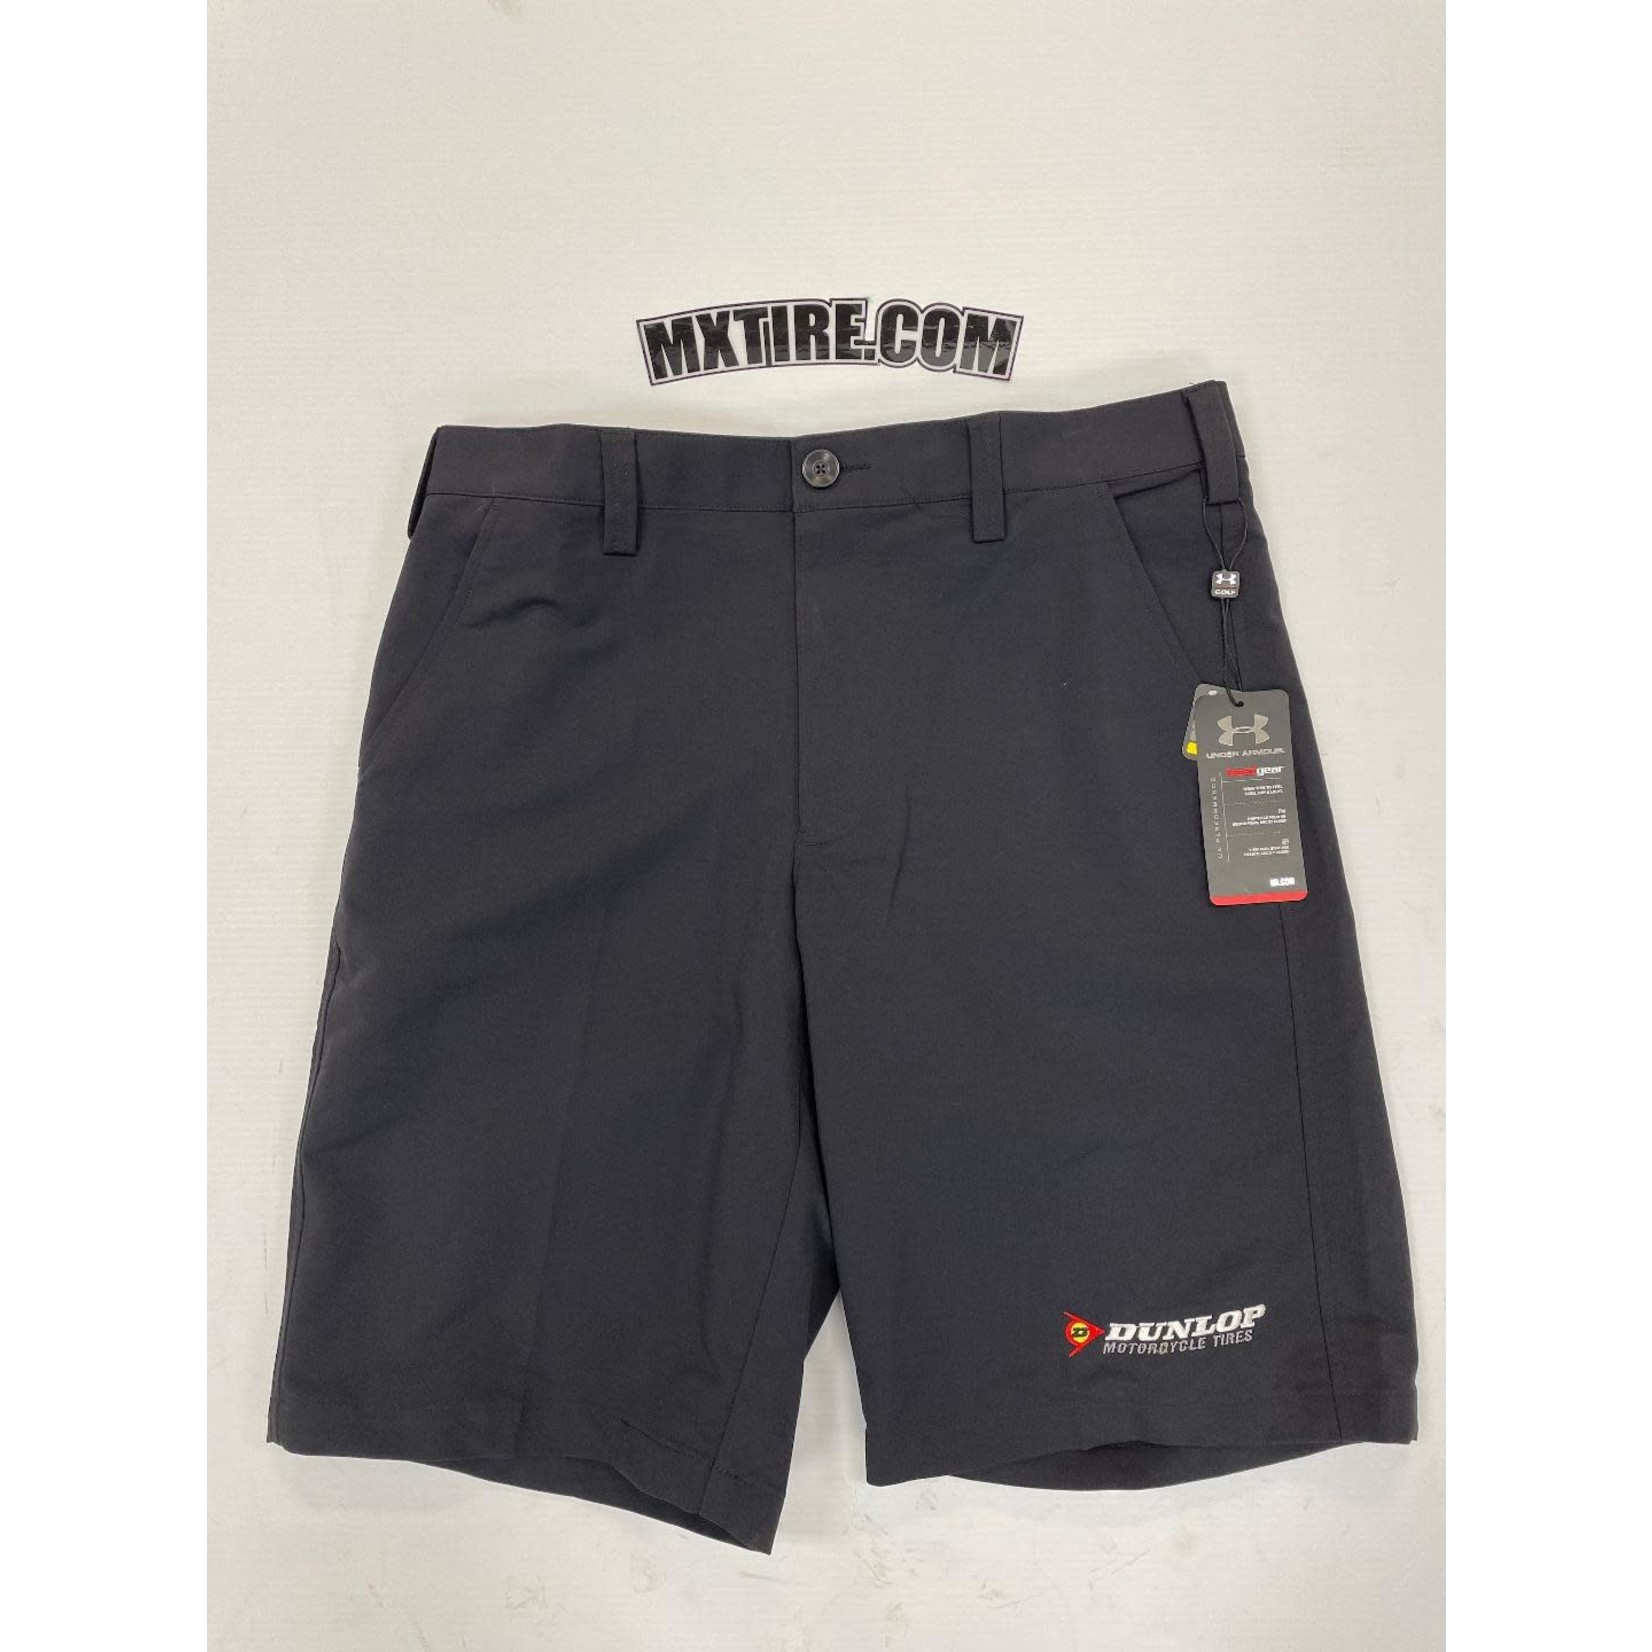 MXTIRE.COM Under Armor Dunlop Shorts, Black